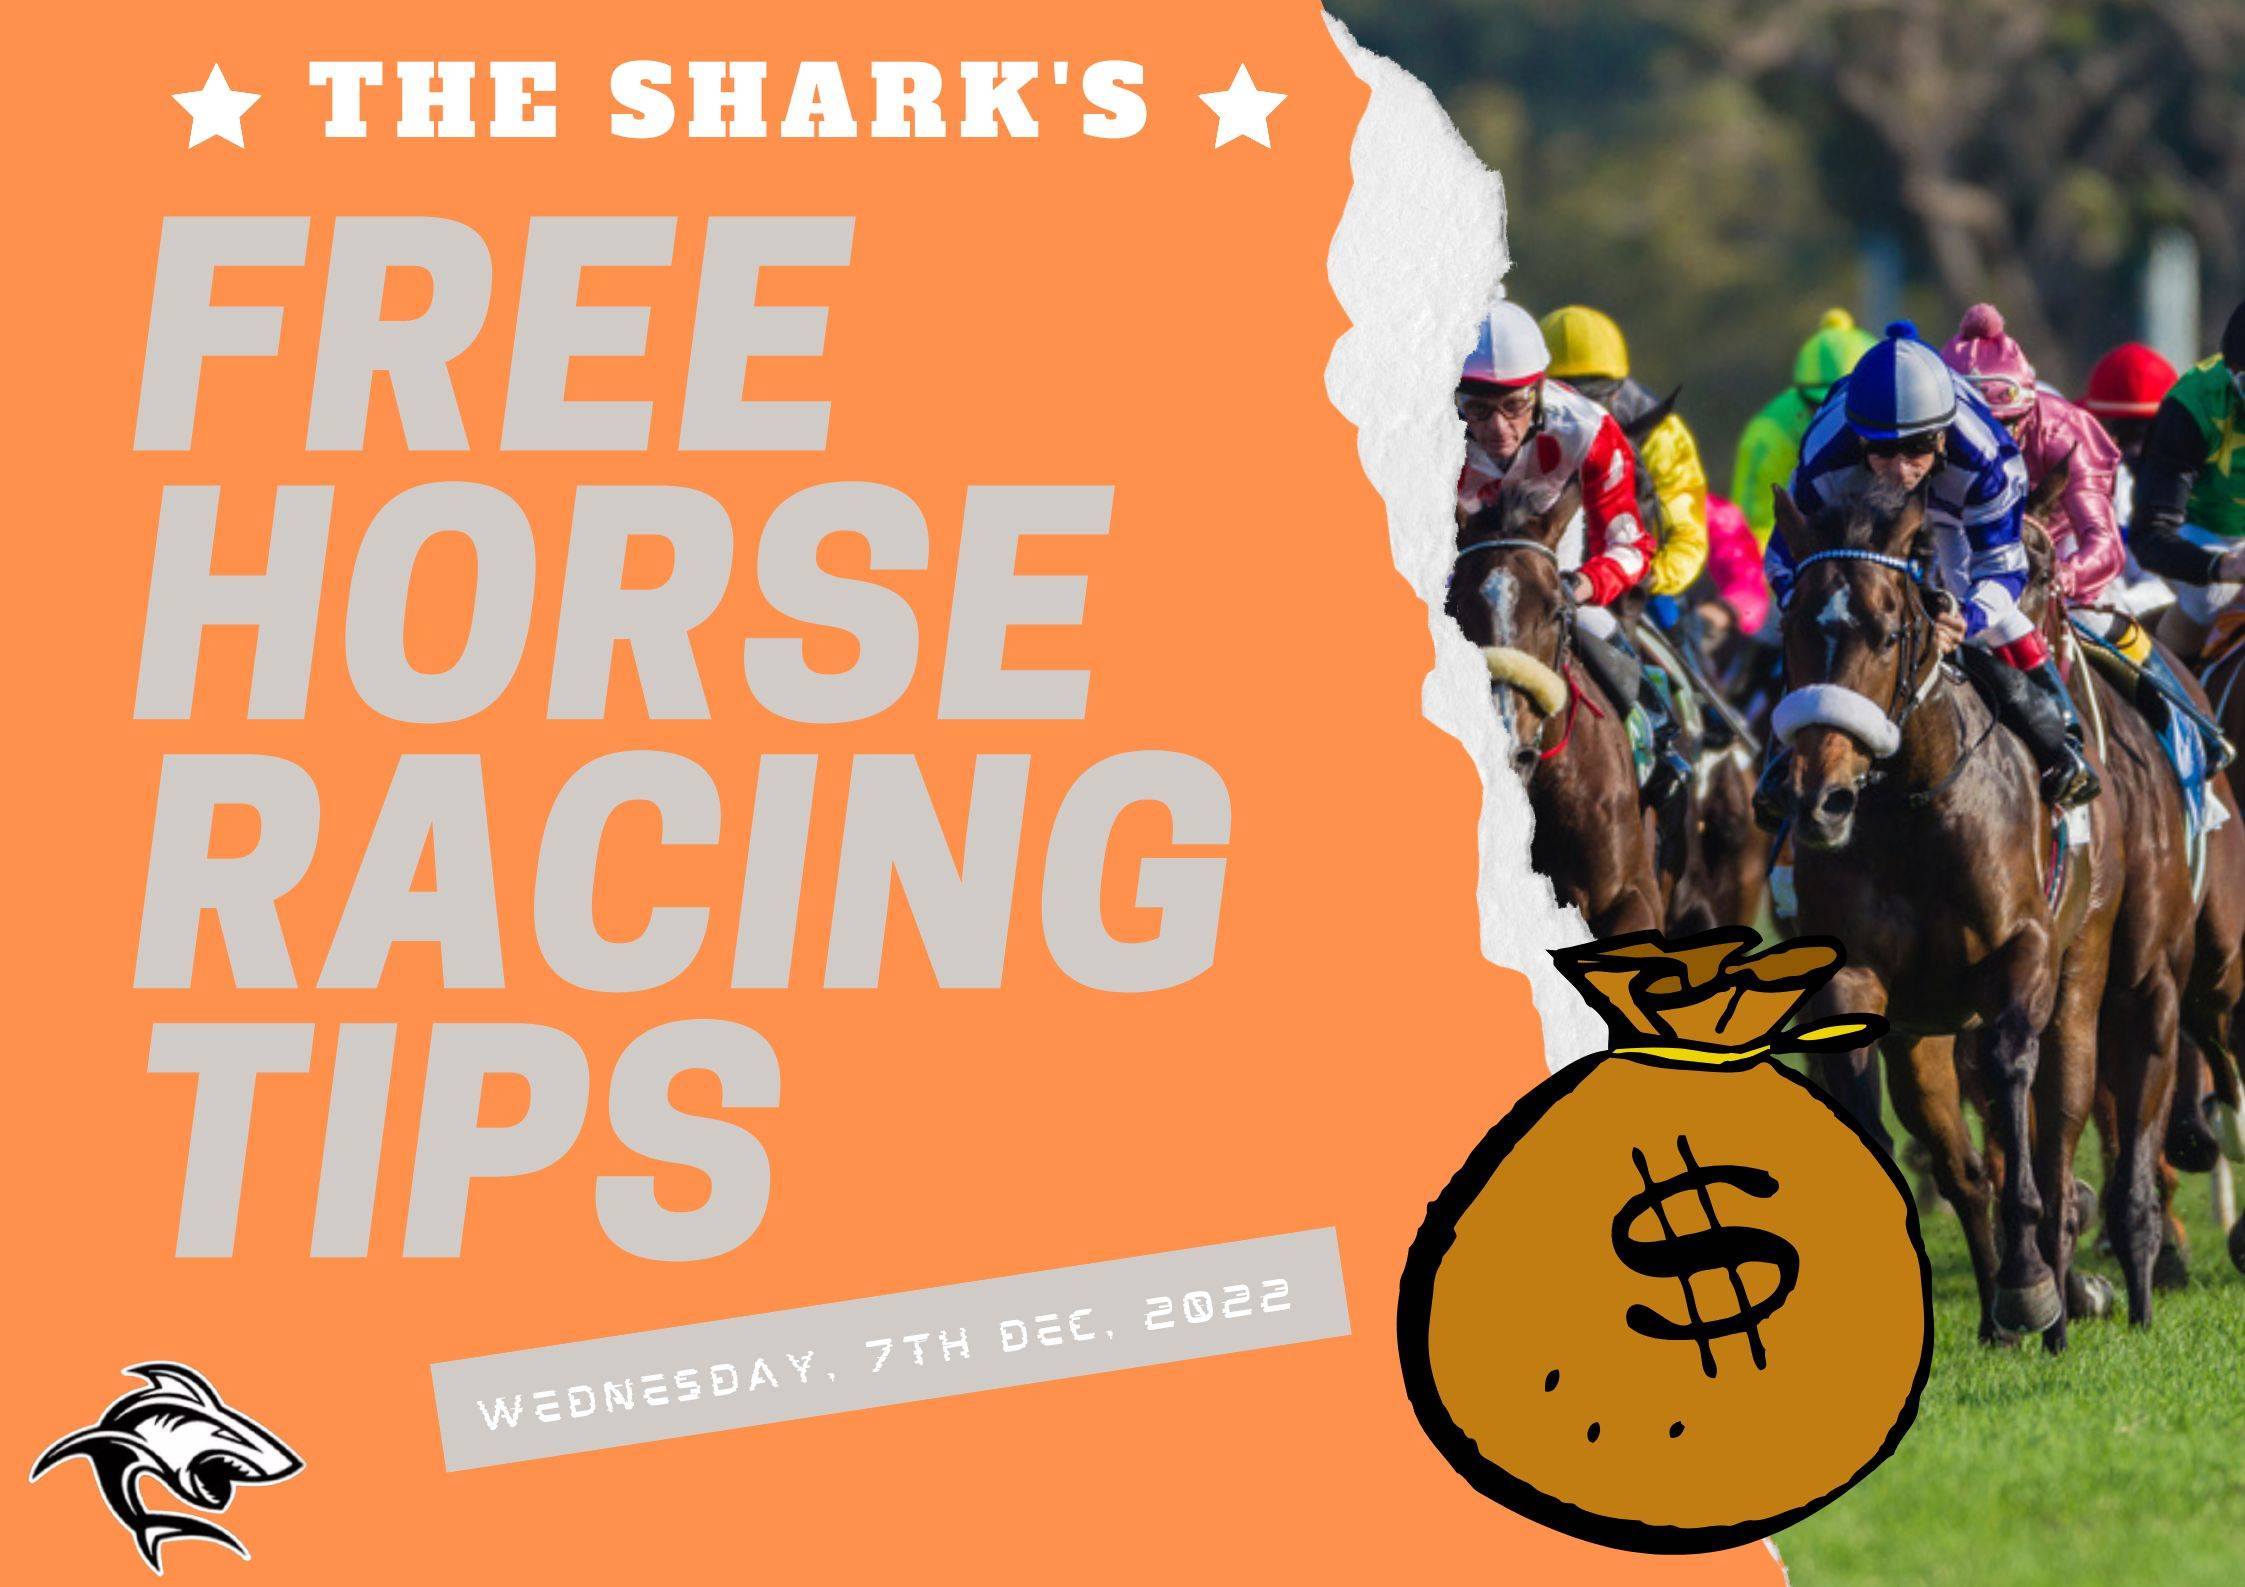 Free Horse Racing Tips - 7th Dec